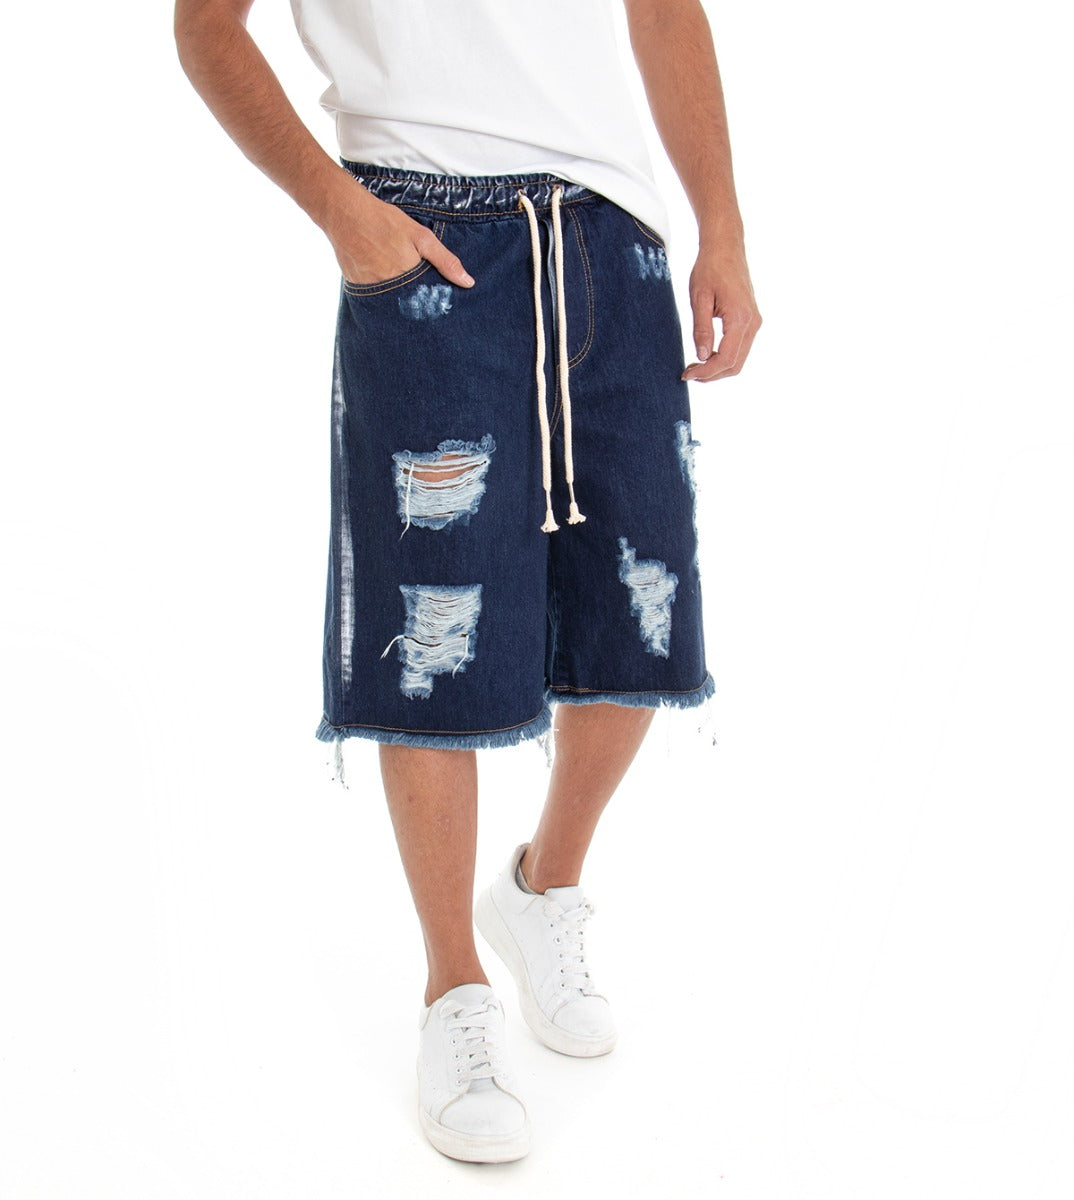 Bermuda Shorts Men's Jeans Short Denim Shorts Dark Blue Over Breaks Elastic GIOSAL-PC1516A